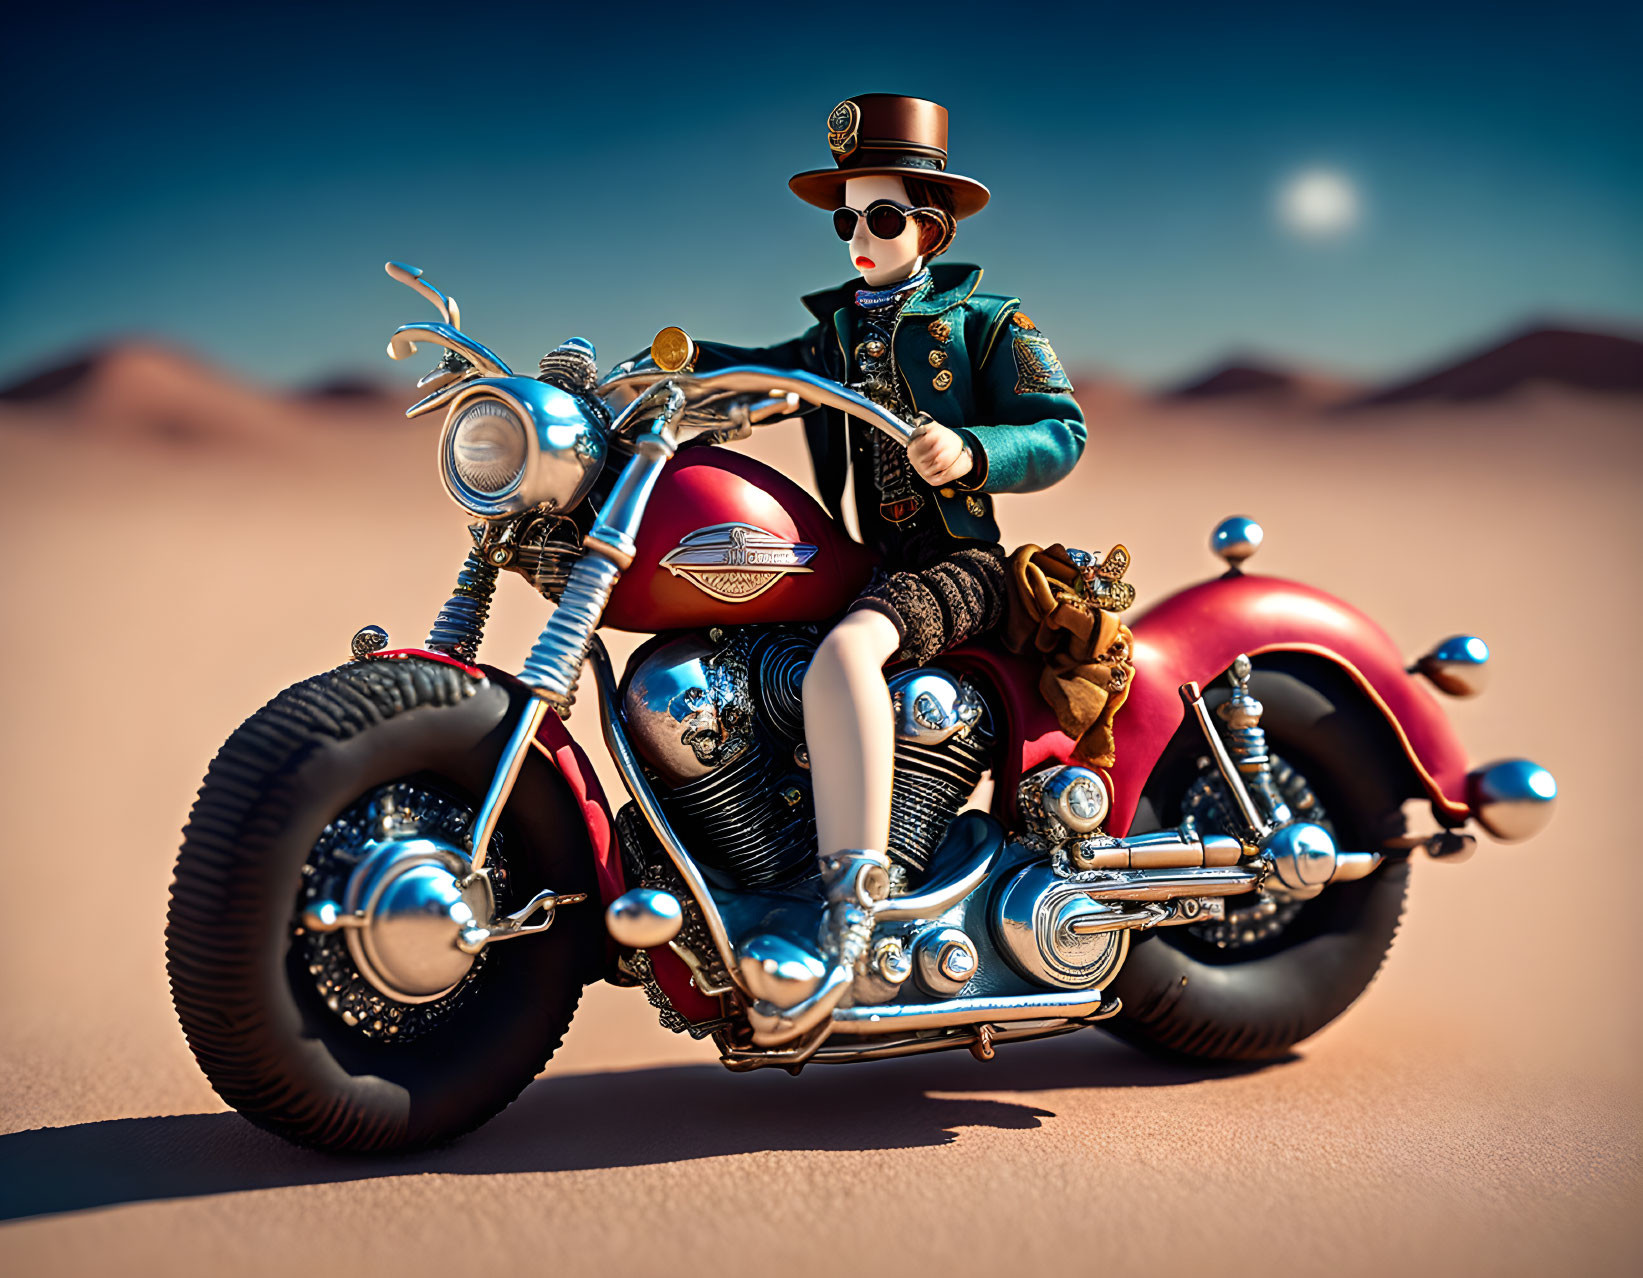 Stylized figure on classic motorcycle in desert landscape